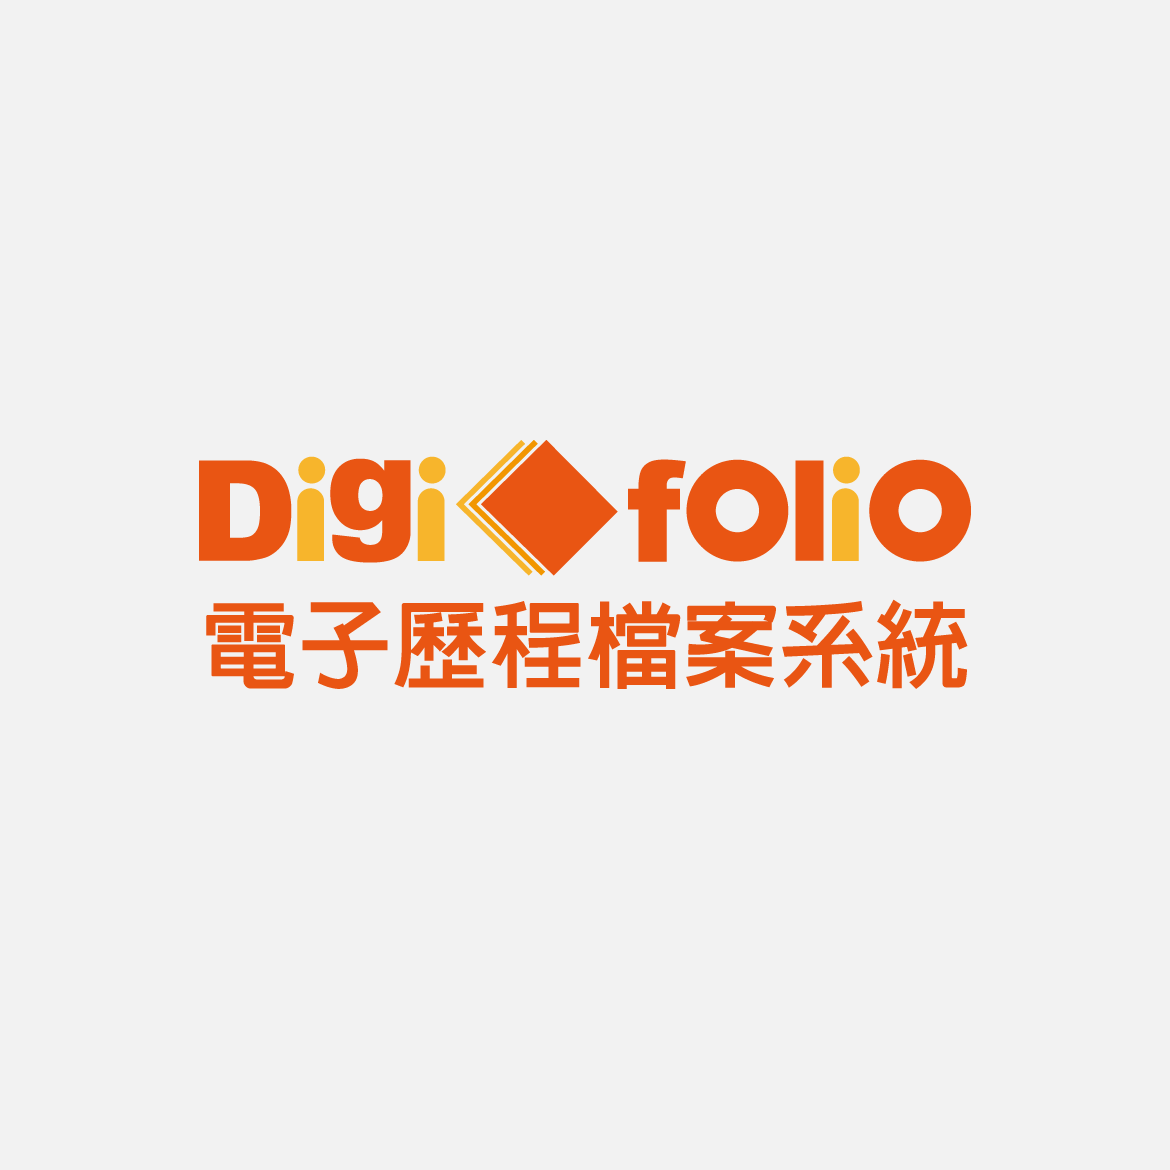 Digi-folio電子歷程檔案系統